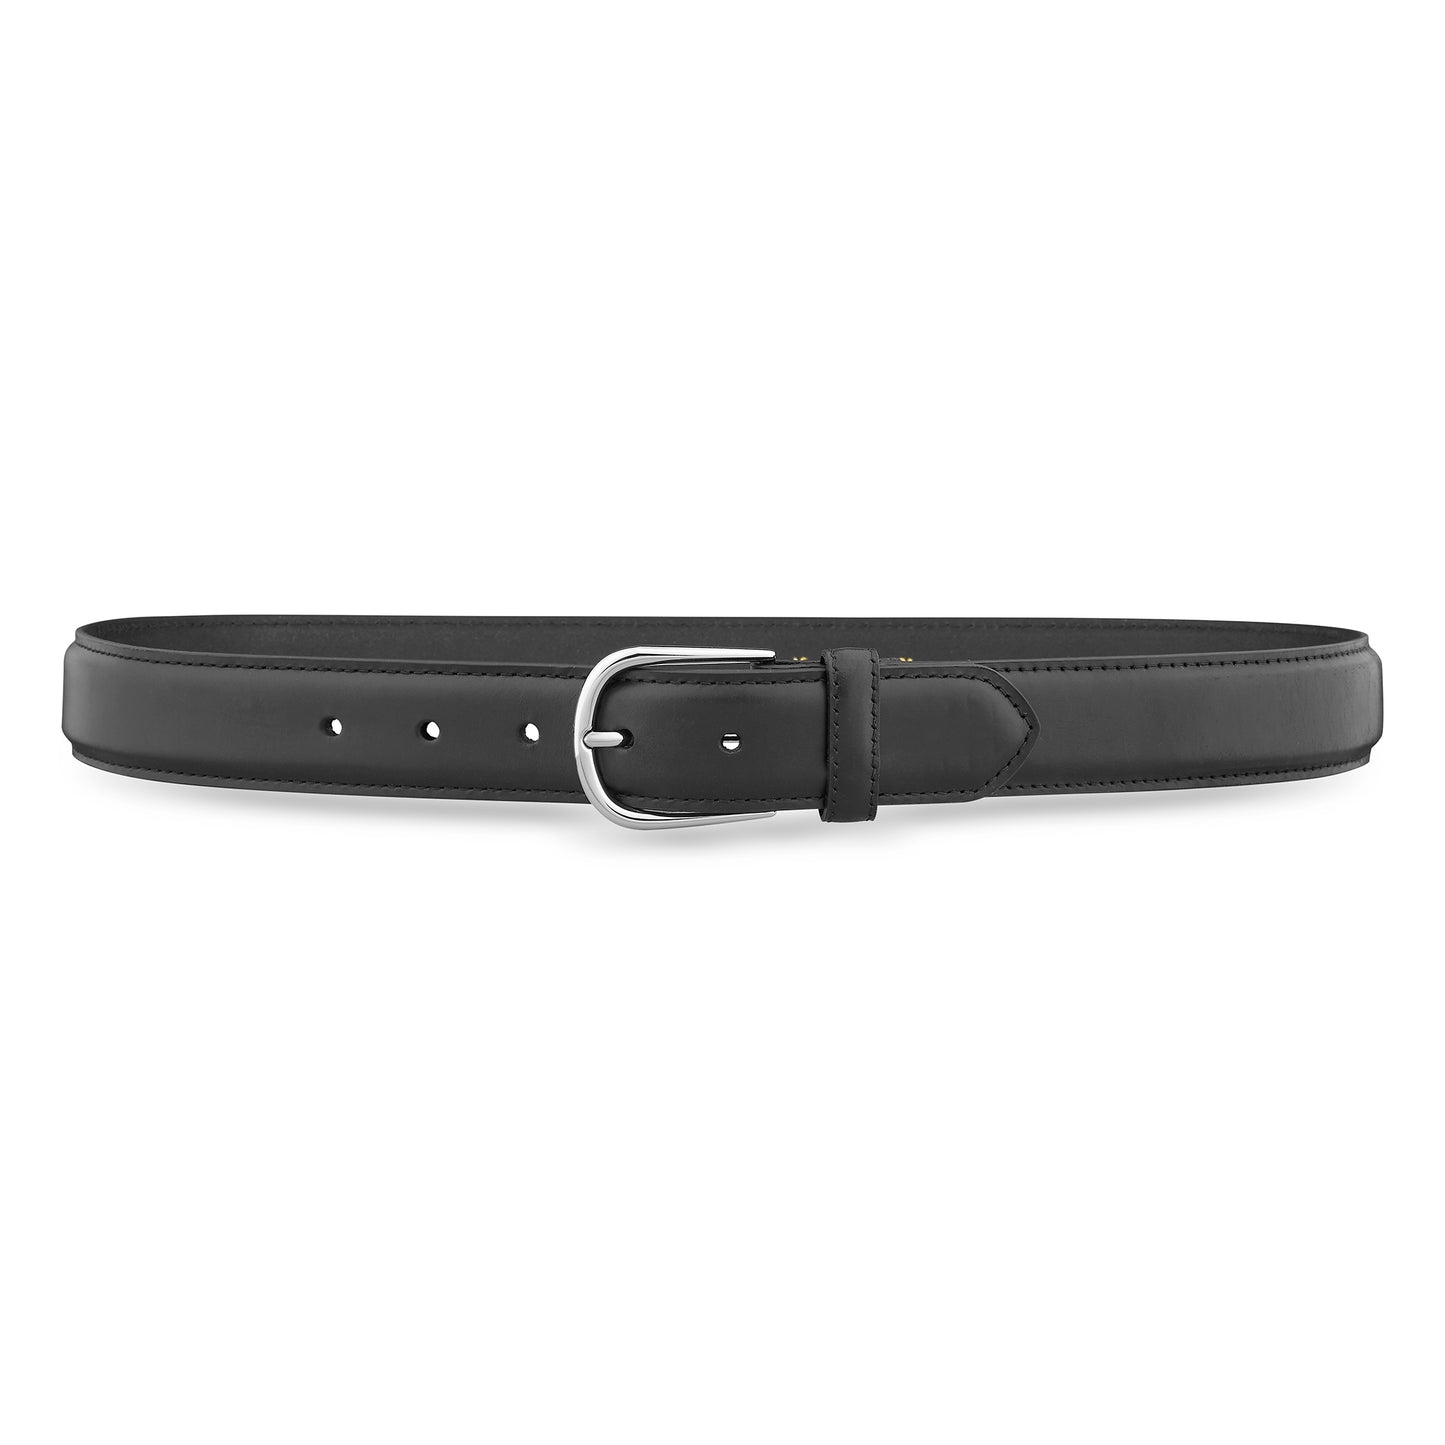 1-3/8" Black Classic Leather Casual Belt